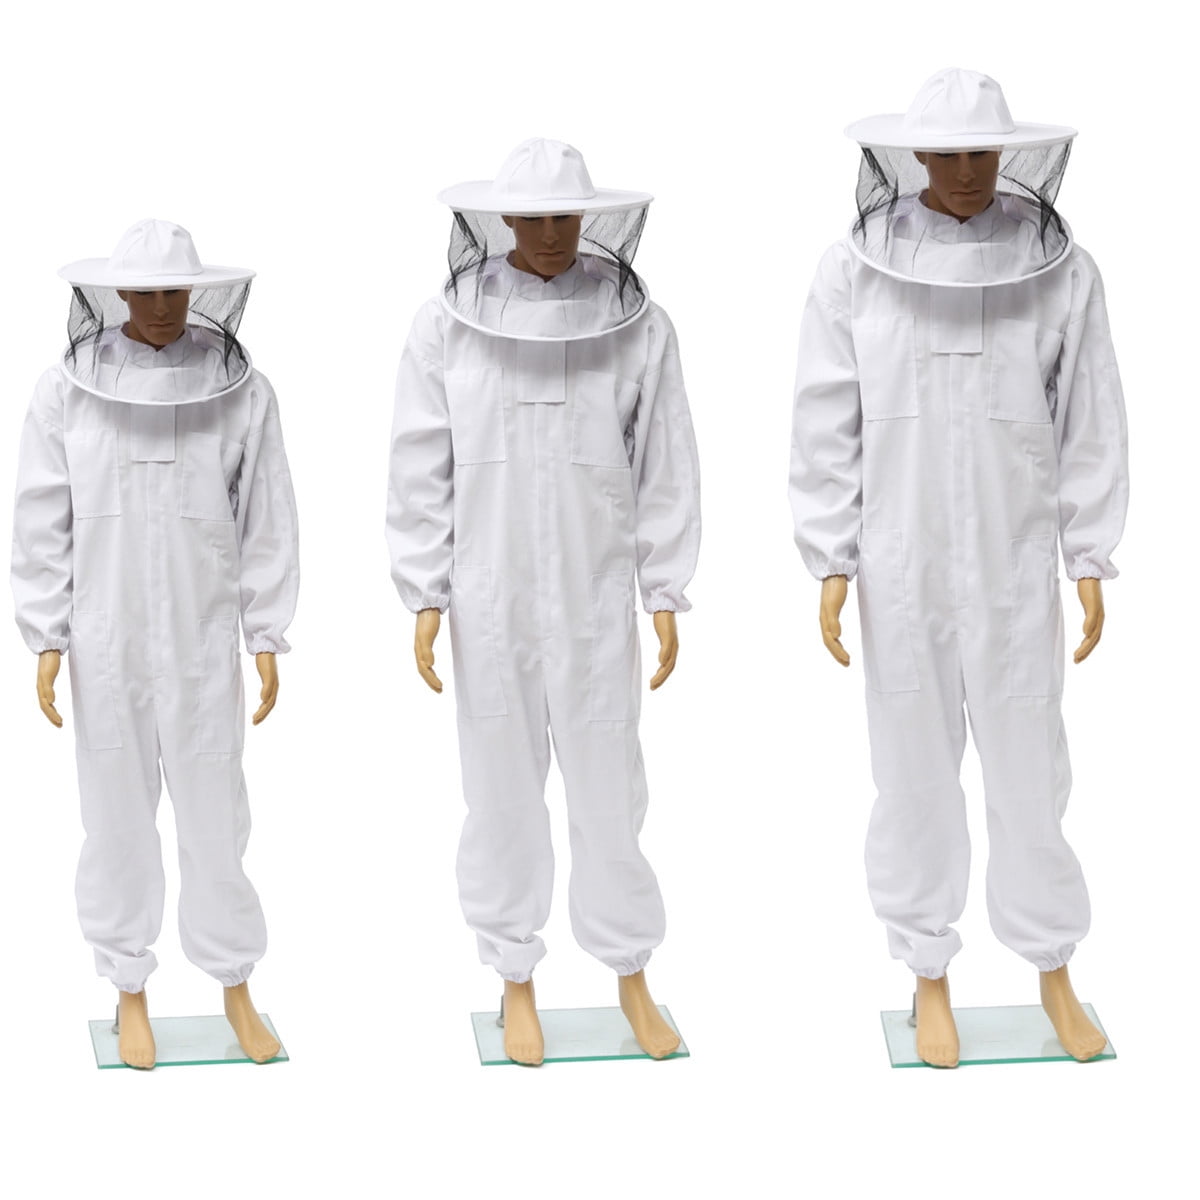 2XL Beekeeper suit Beekeeping Bee Suit with Fencing Veil including Bee Gloves 